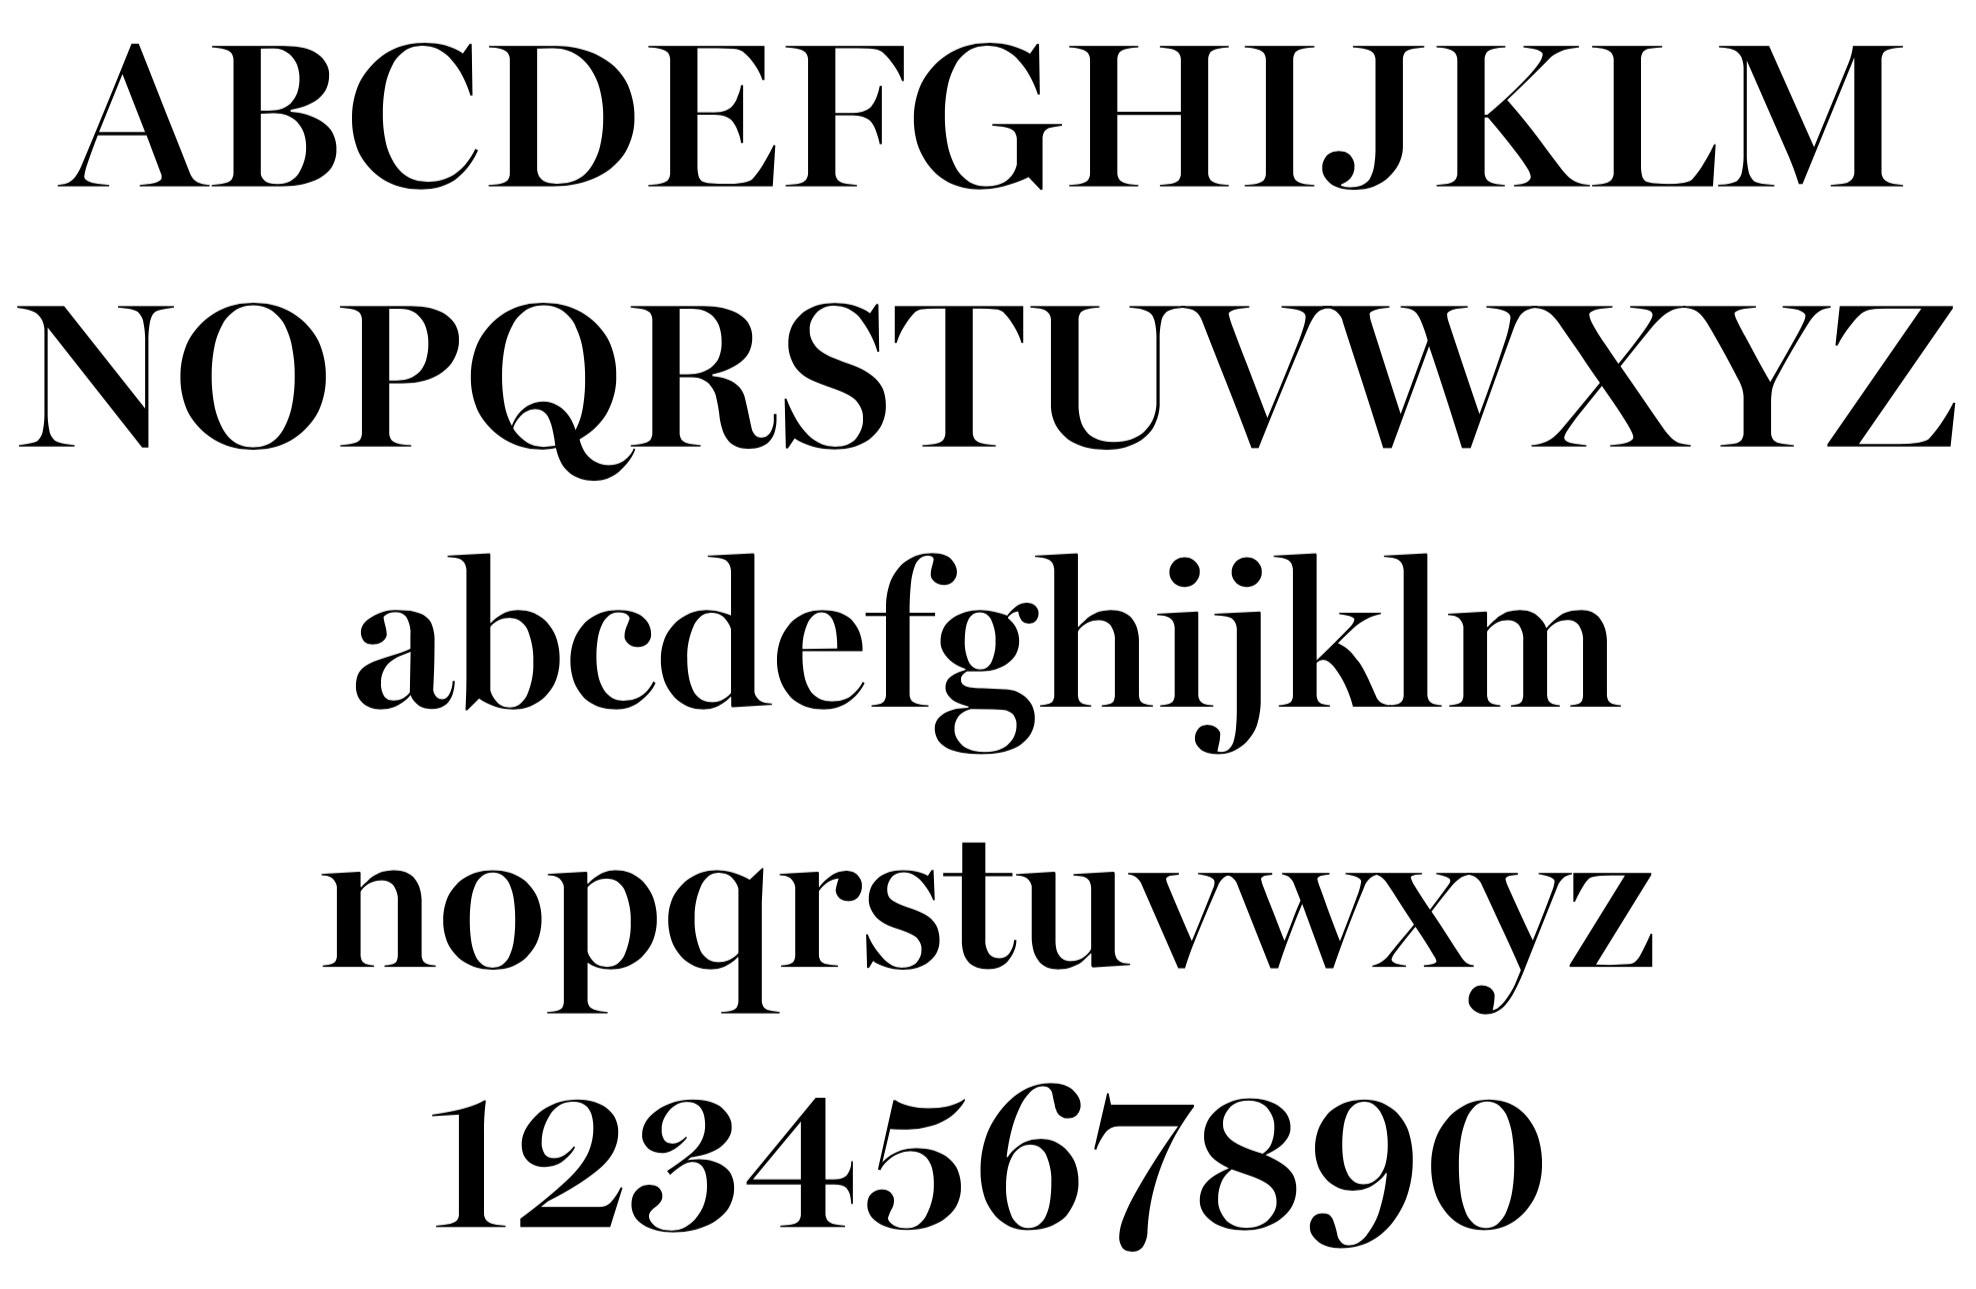 Lincoln Miller - Font List entries - Typography.Guru